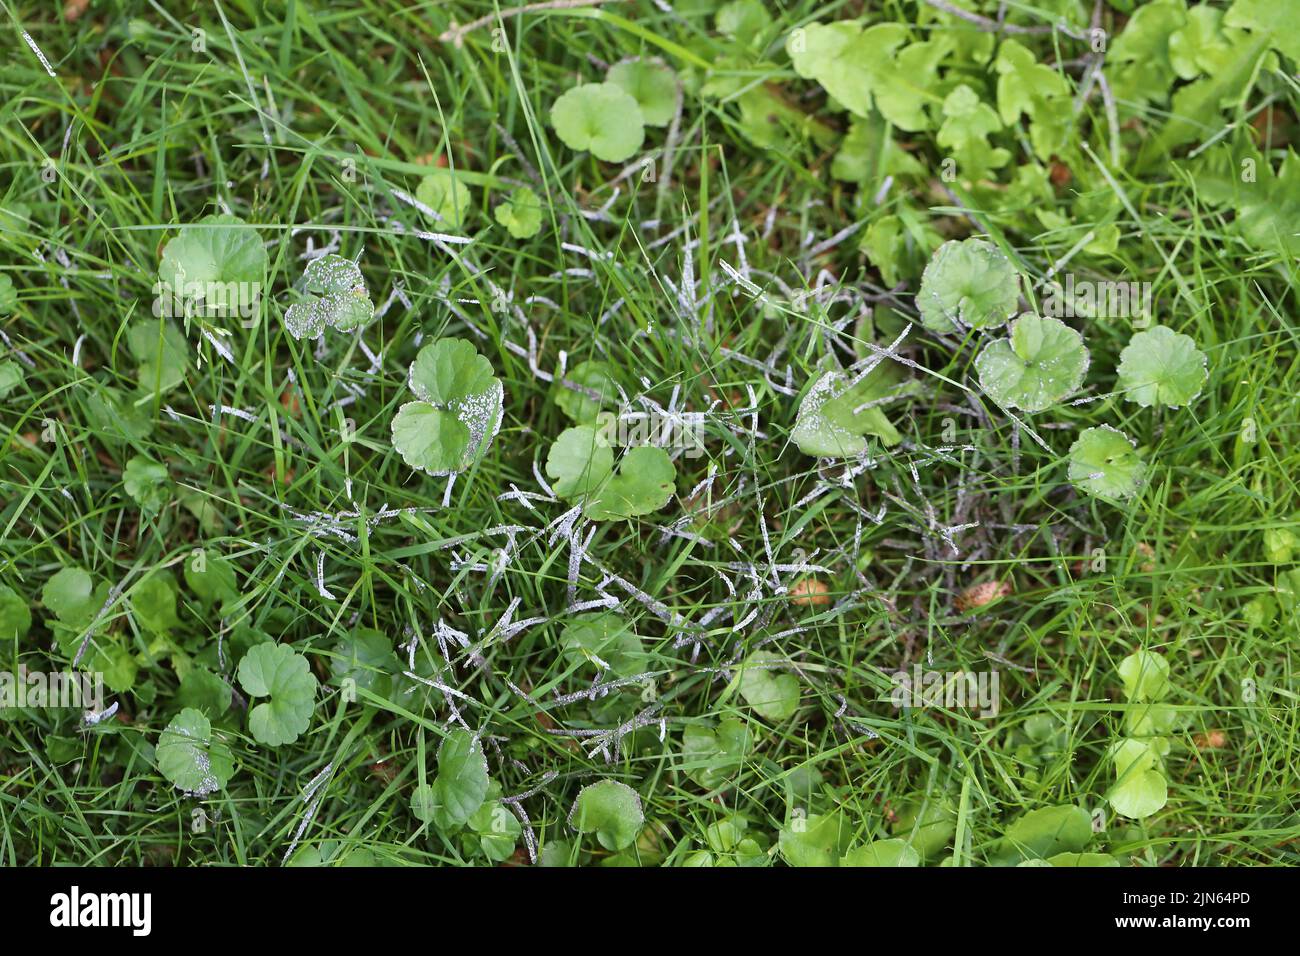 Fungi overgrowing the lawn. Poland. Stock Photo